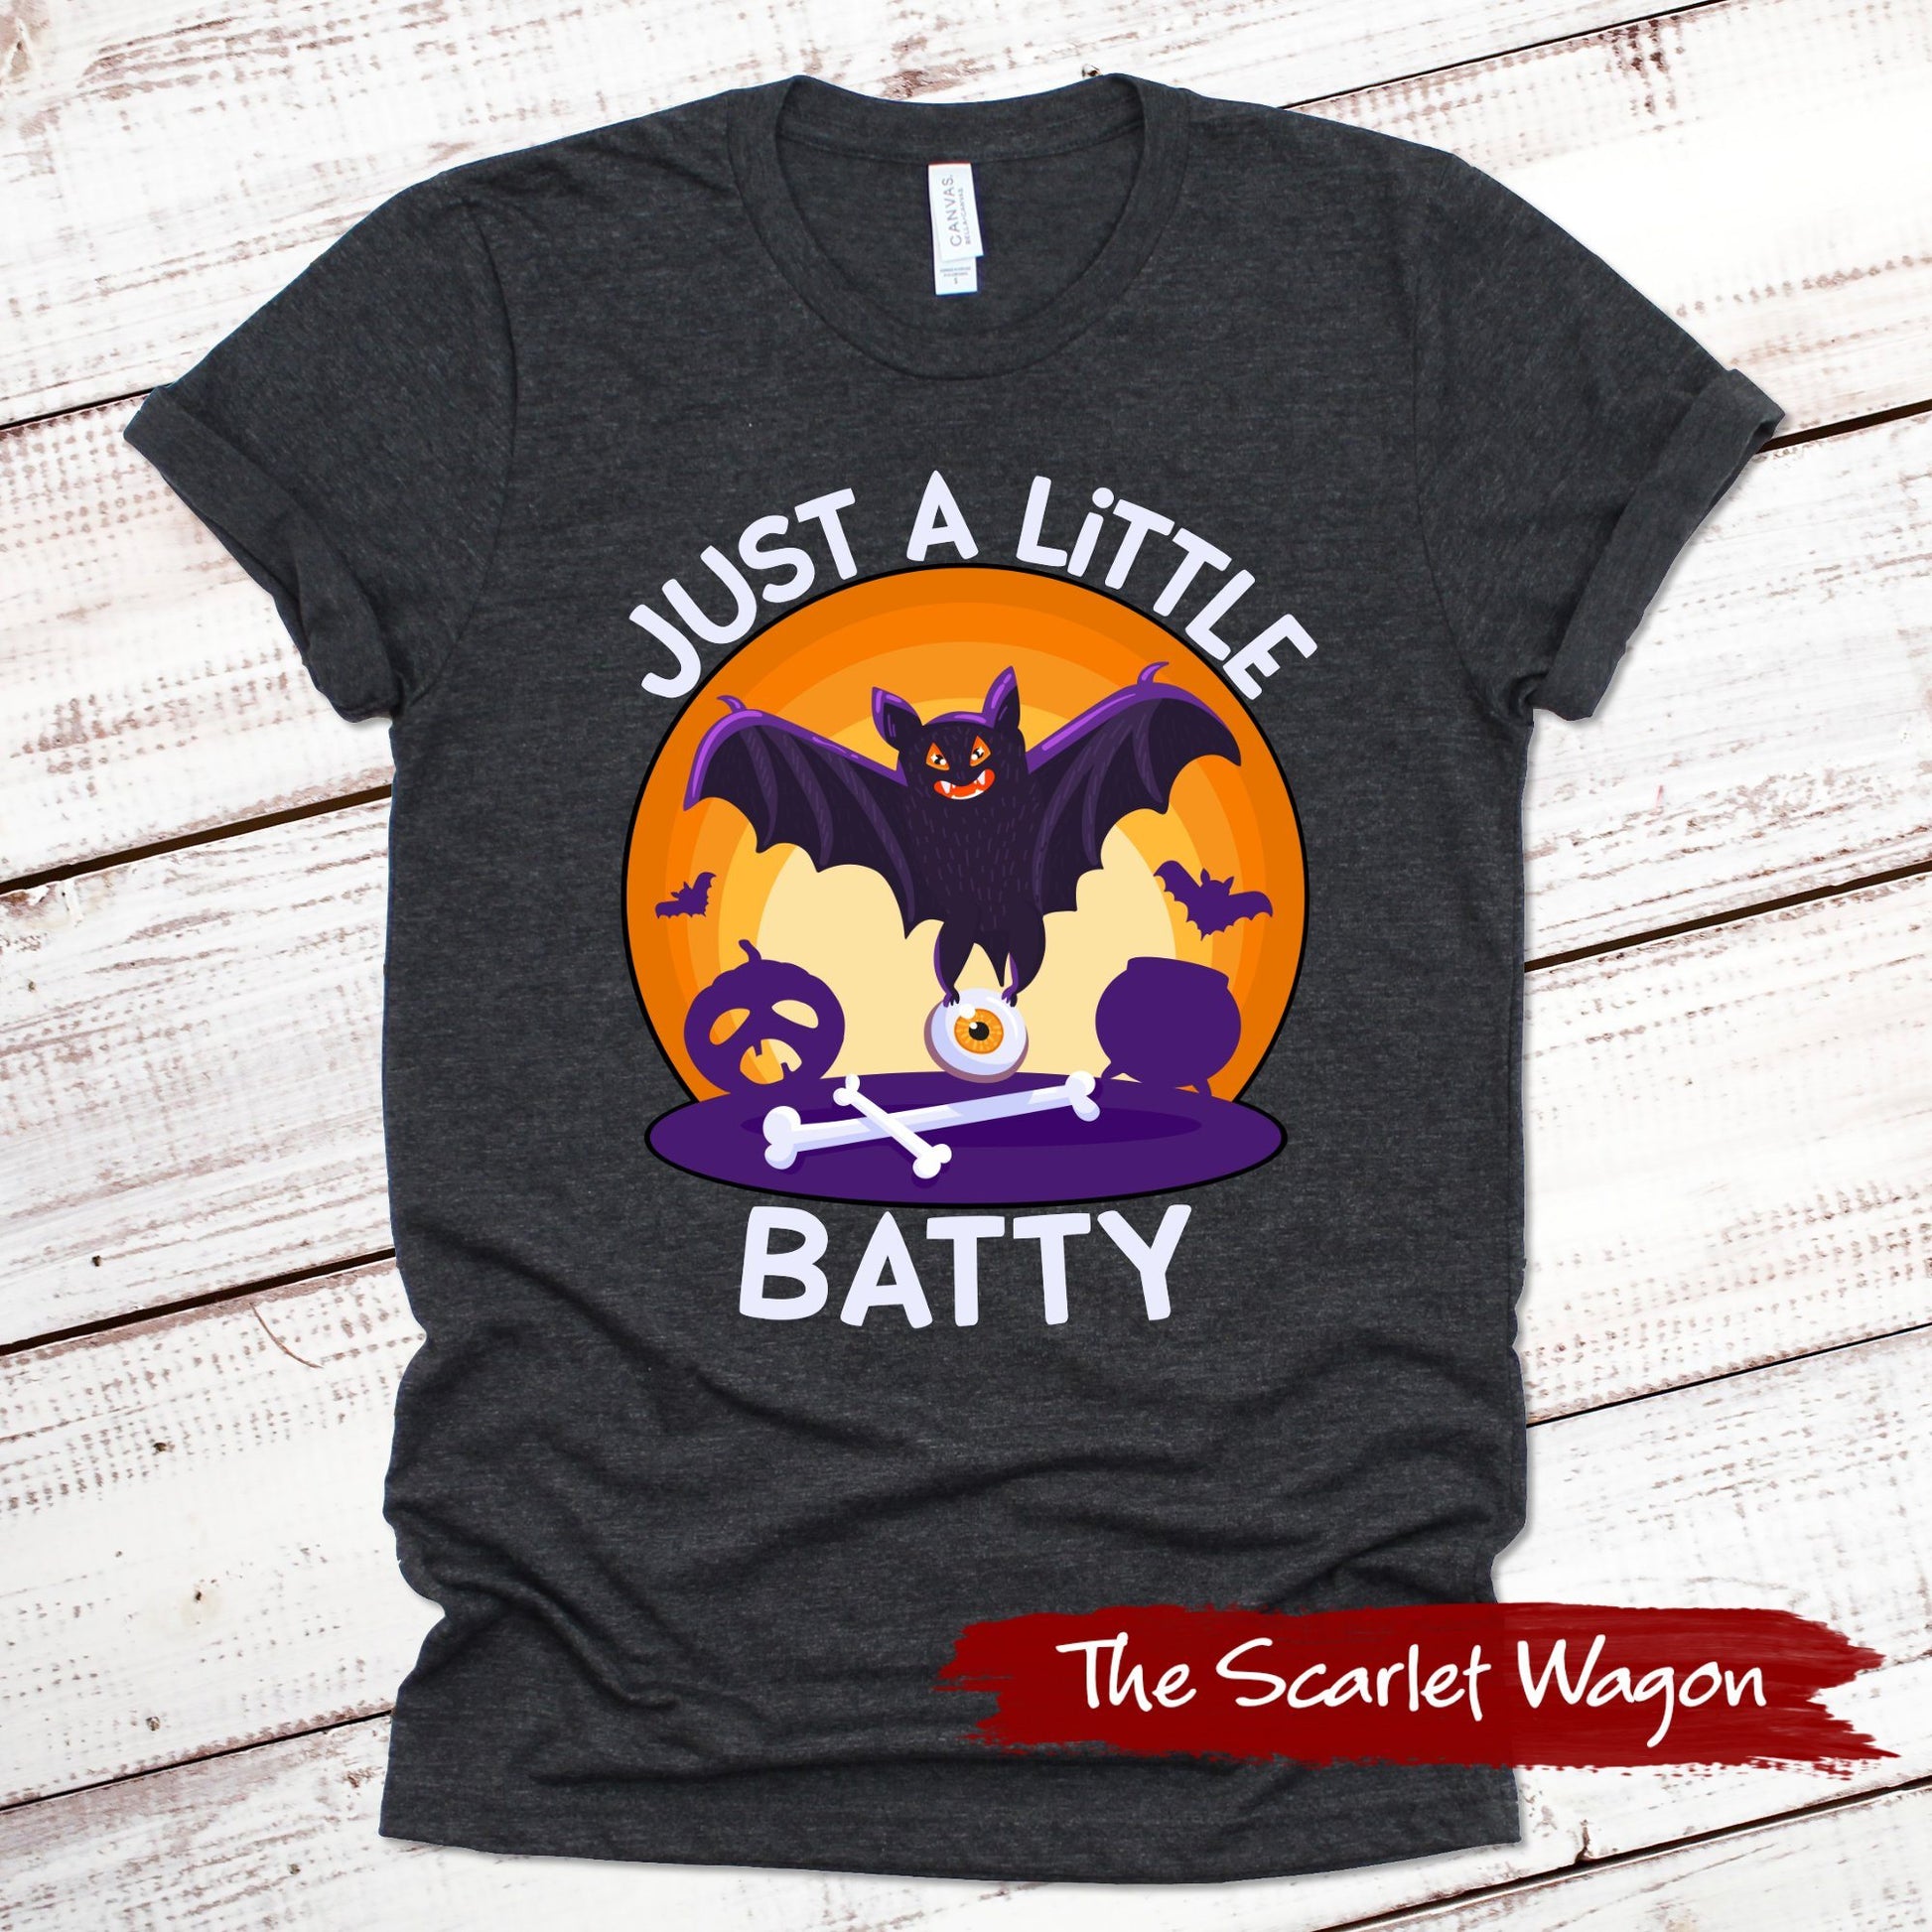 Just a Little Batty Halloween Shirt Scarlet Wagon Dark Gray Heather XS 